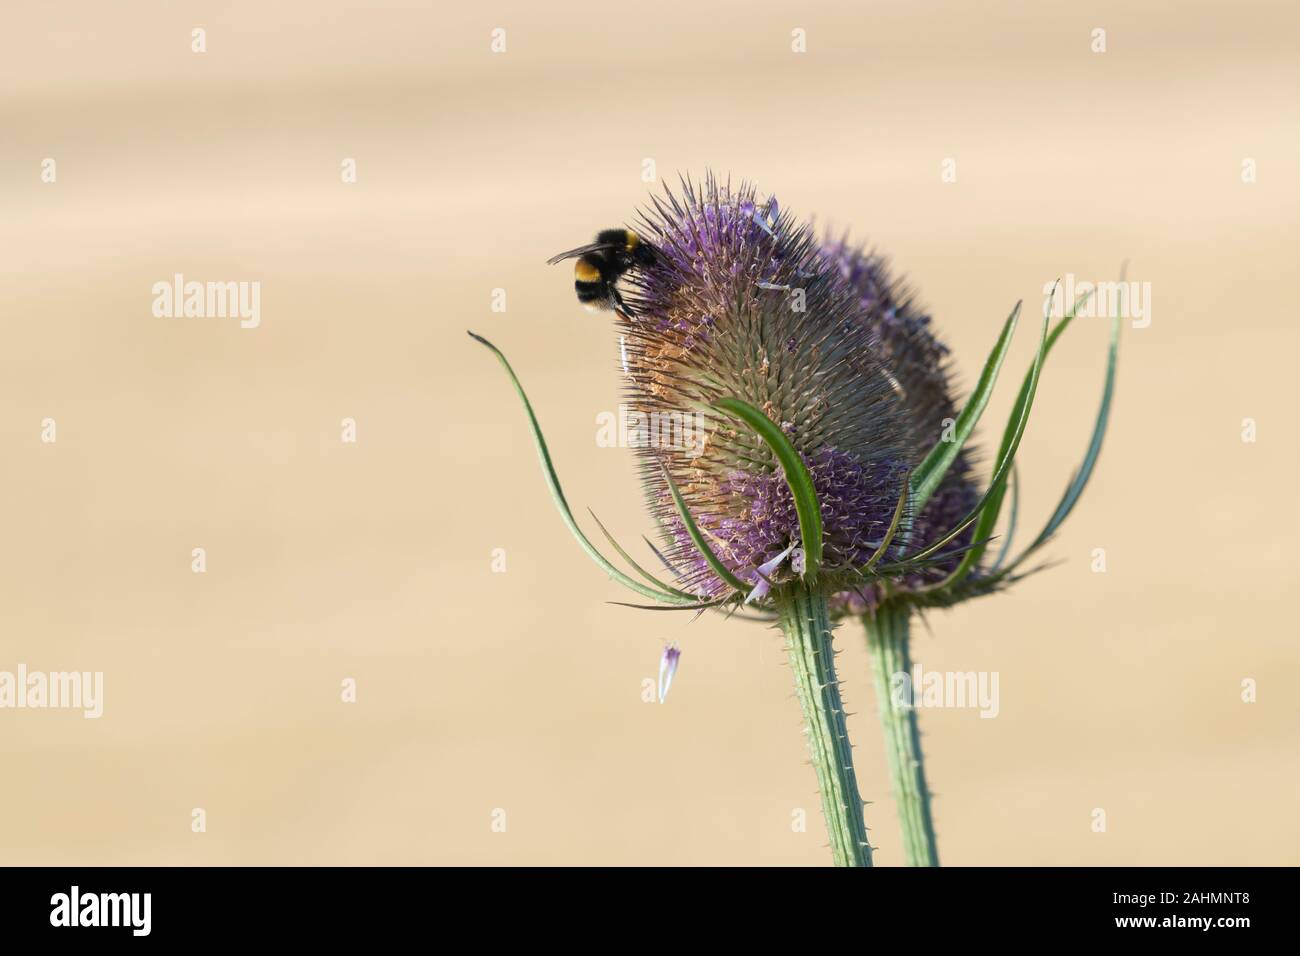 A Buff-tailed Bumblebee (Bombus Terrestris) Feeds on a Wild Teasel Flower (Dipsacus Fullonum) in Summer Sunshine Stock Photo